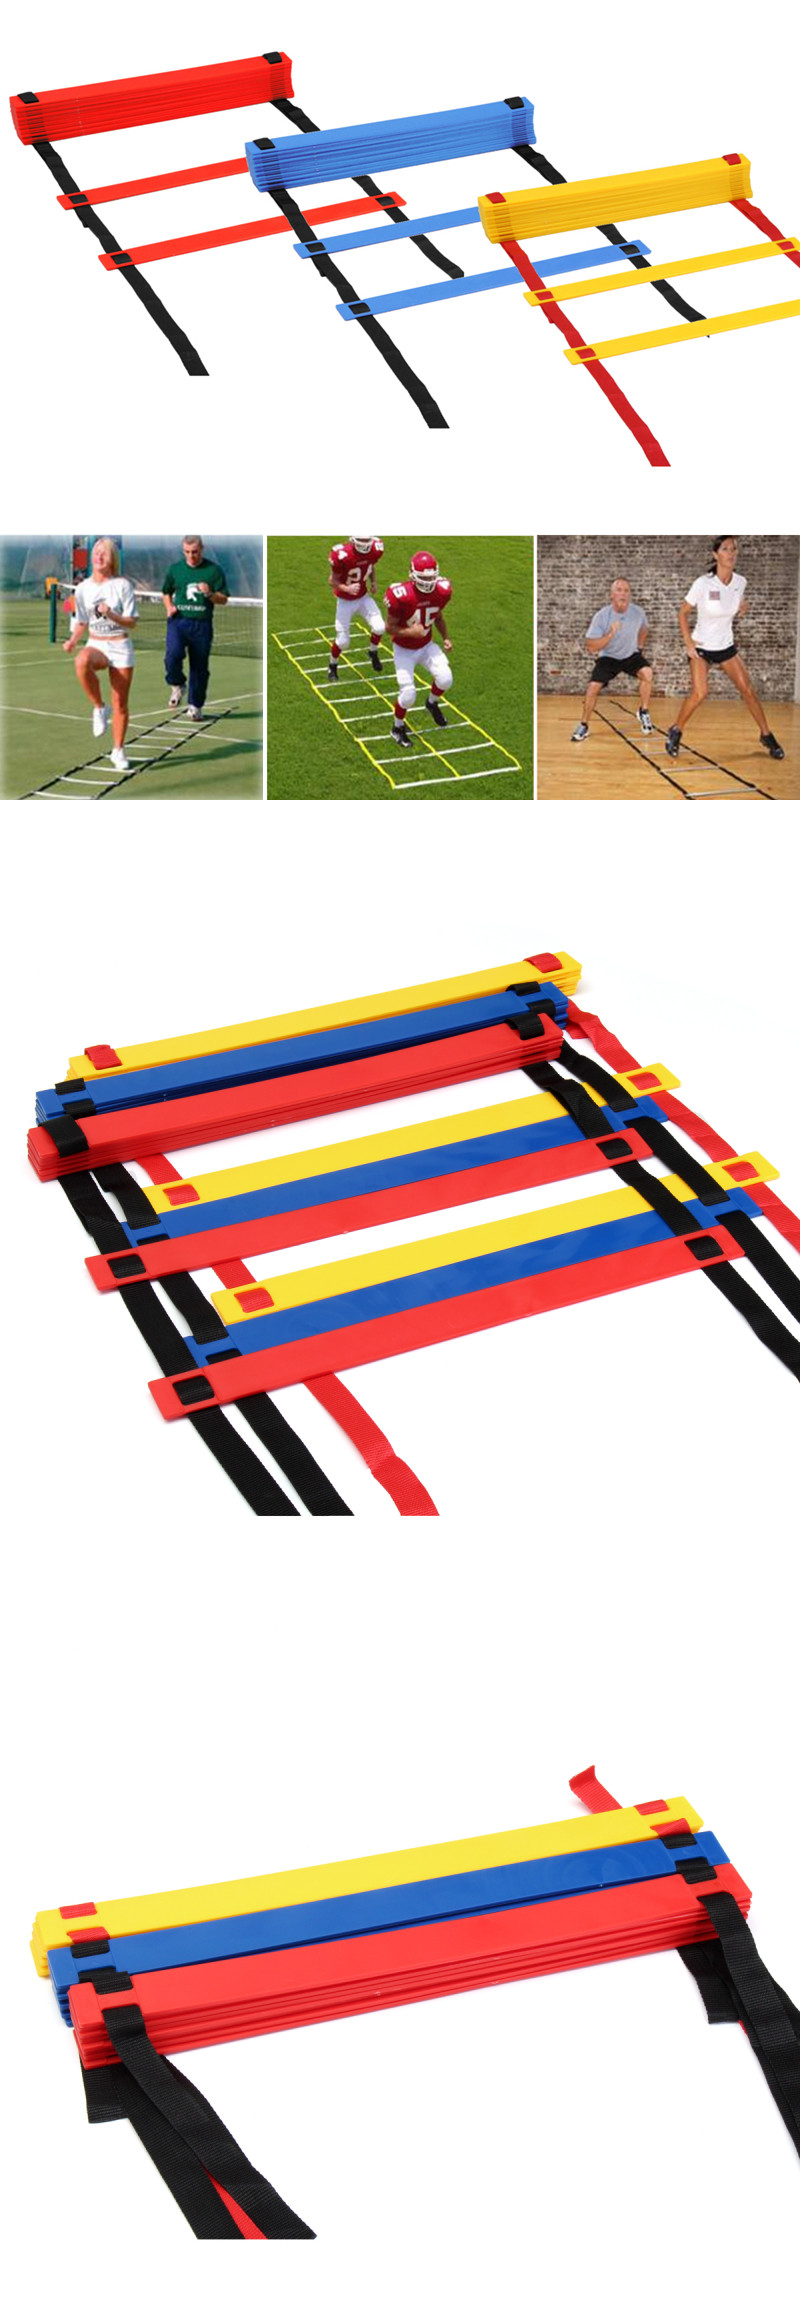 IPReereg-8-Rungs-Speed-Agility-Ladder-Soccer-Sport-Ladder-Training-Carry-Bag-1203622